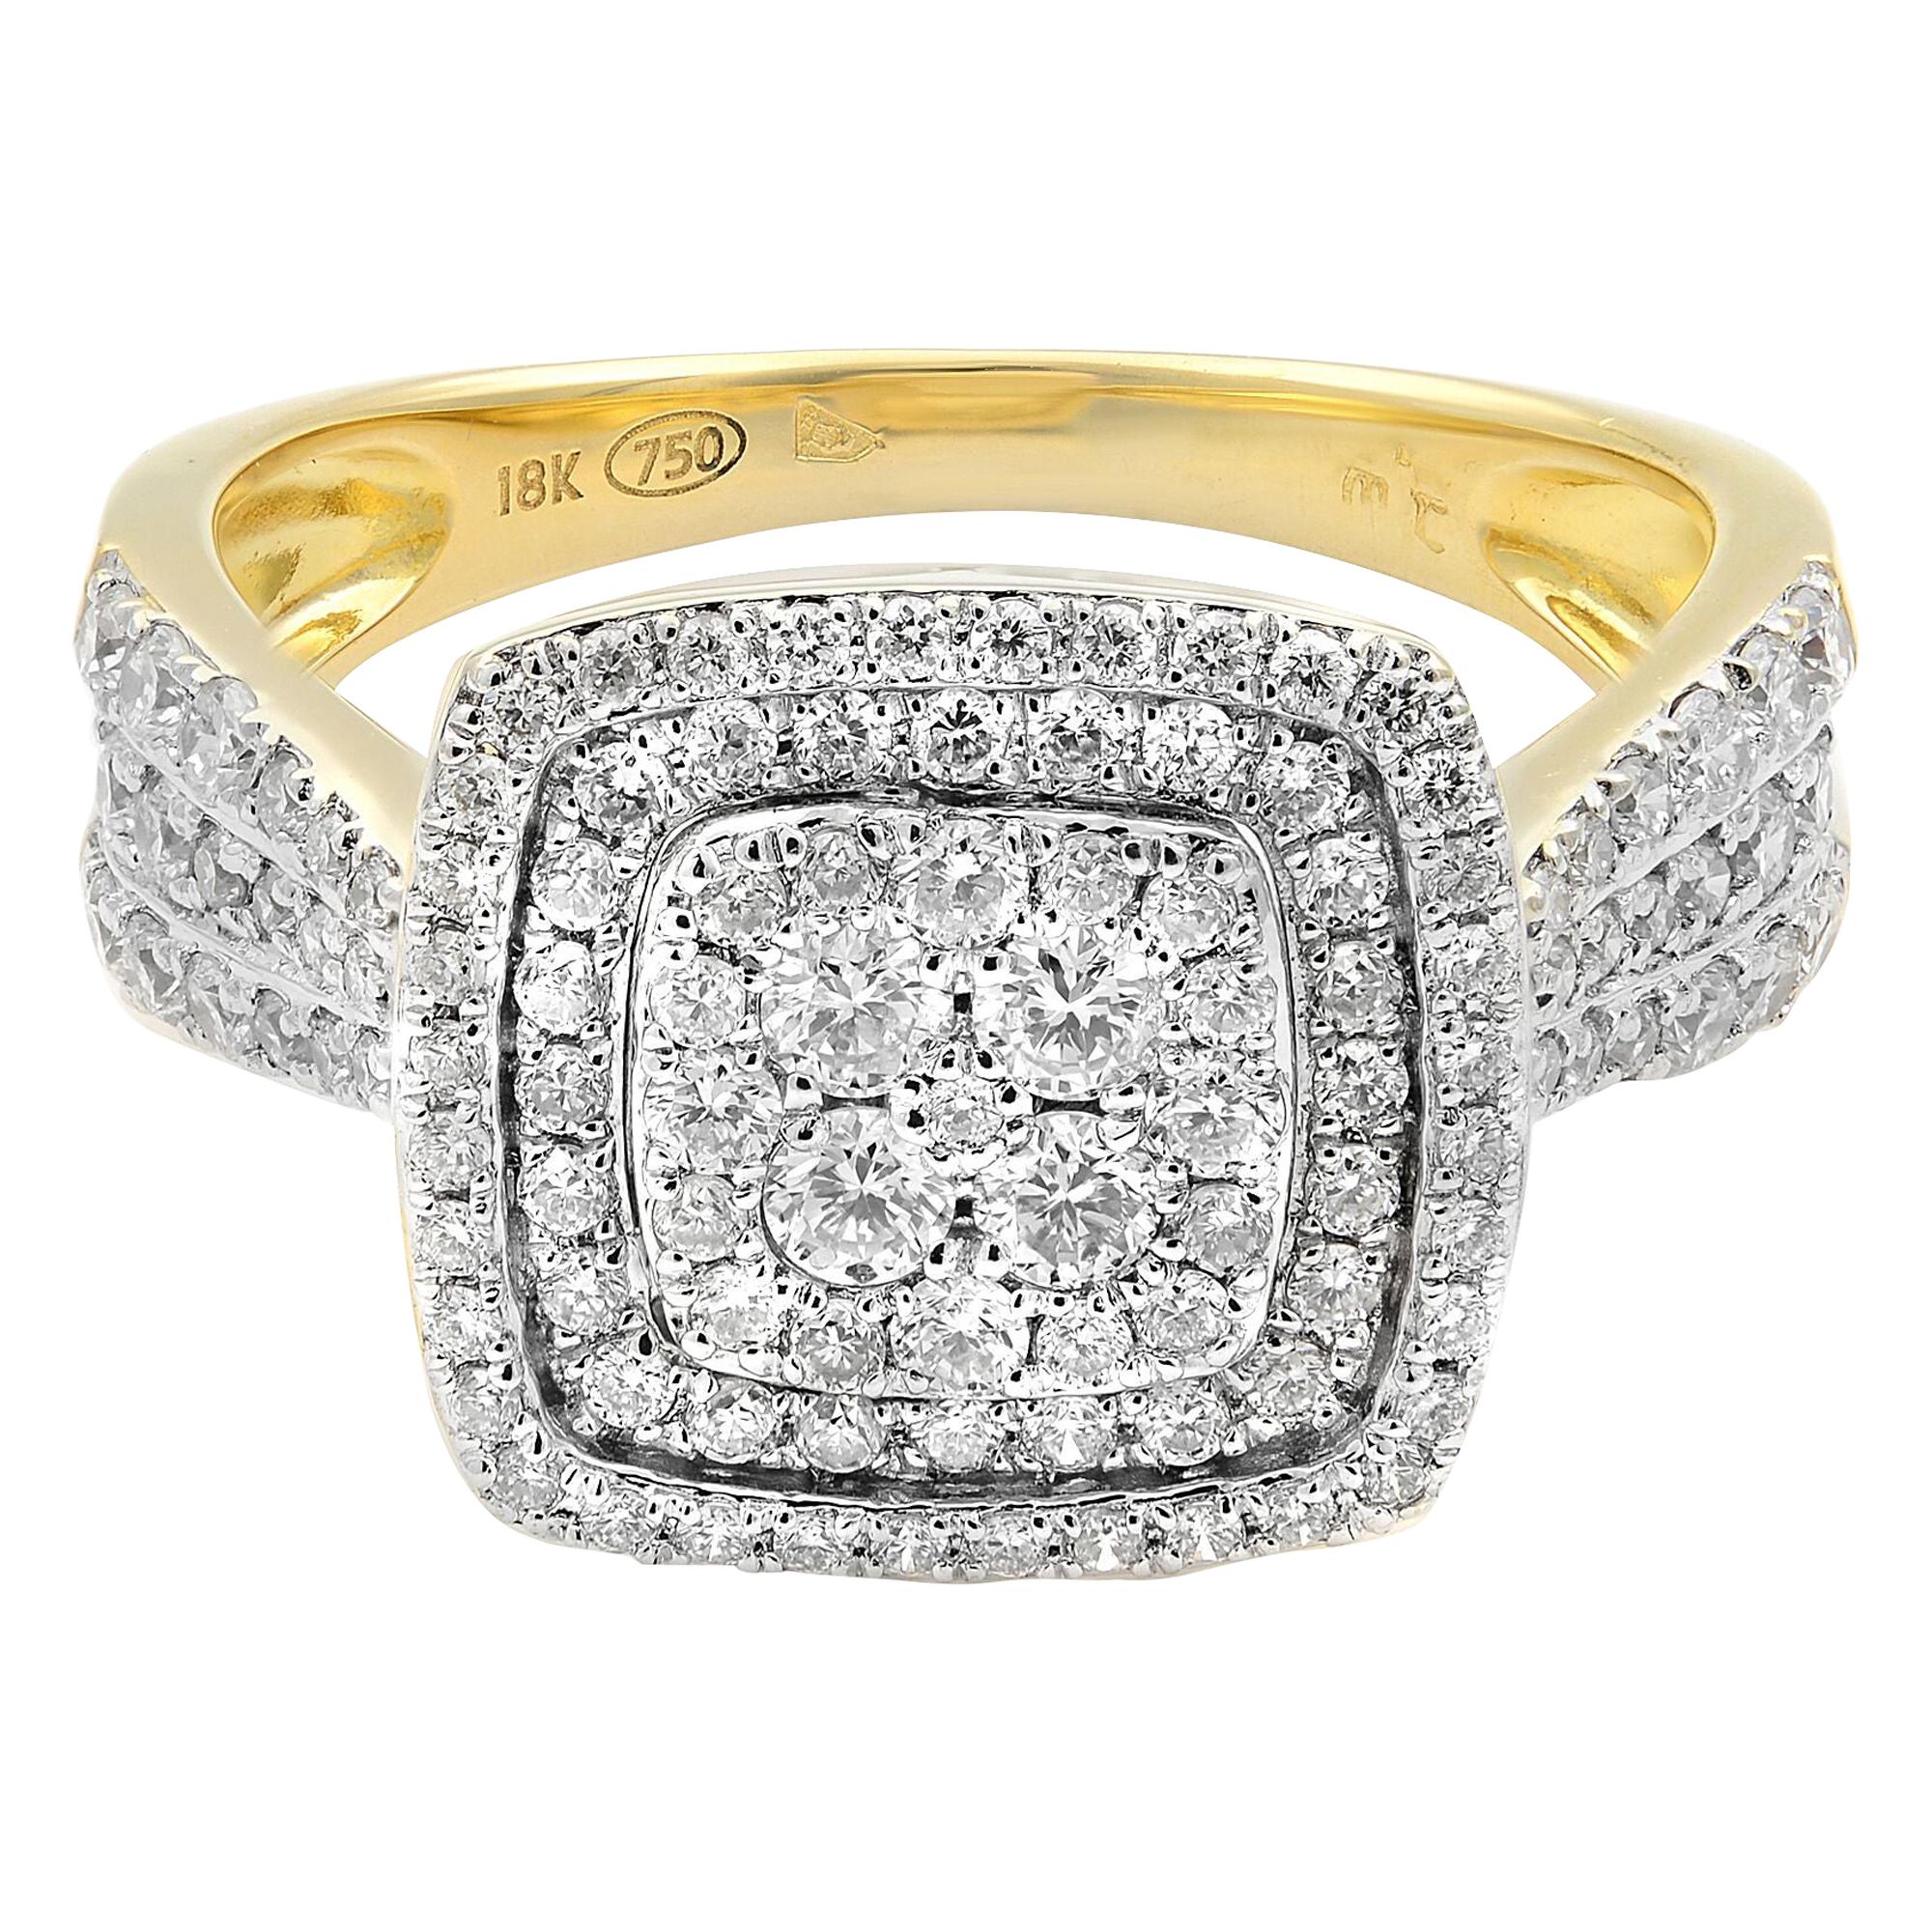 Rachel Koen Multi Diamond Halo Engagement Ring 18K Yellow Gold 0.95 Cttw Size 7 For Sale